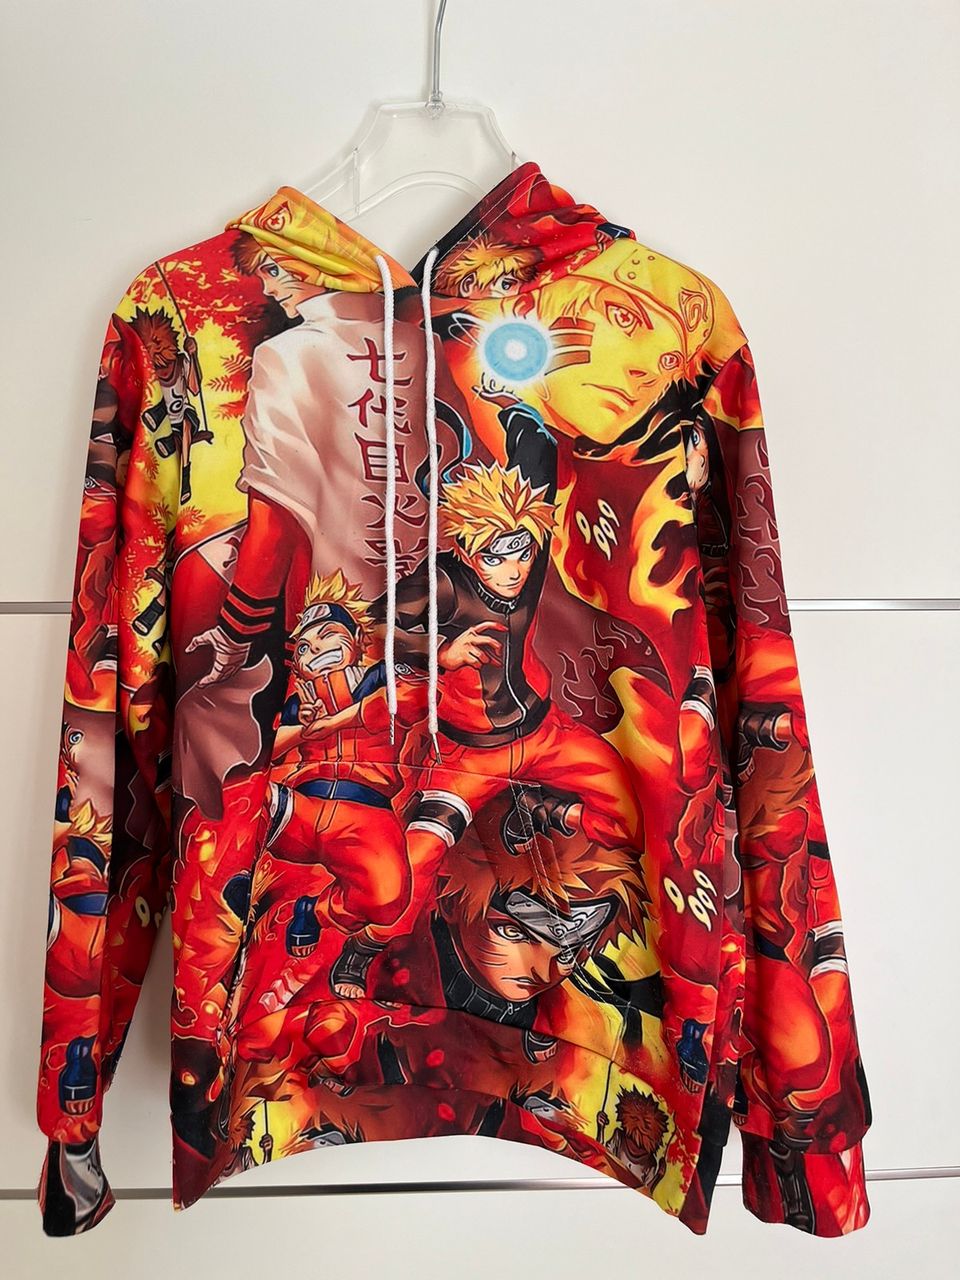 Naruto vaatteita paketti, 150-160 cm huppareita ja paitoja